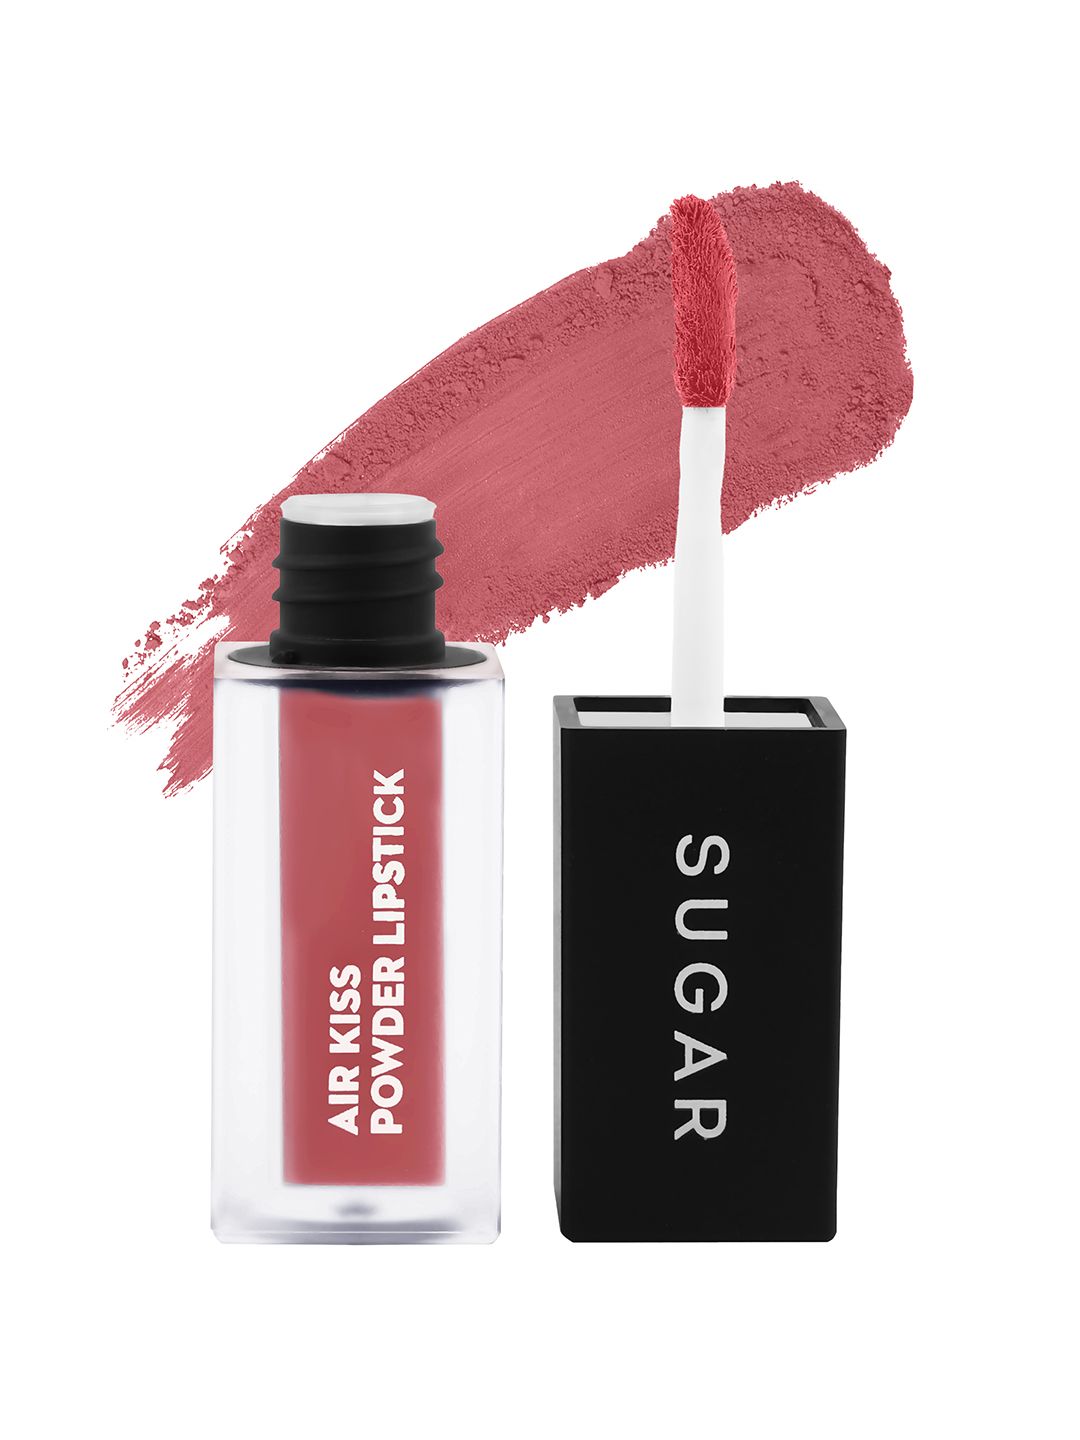 SUGAR Air Kiss Powder Lipstick - Strawberry Macaron 05 Price in India